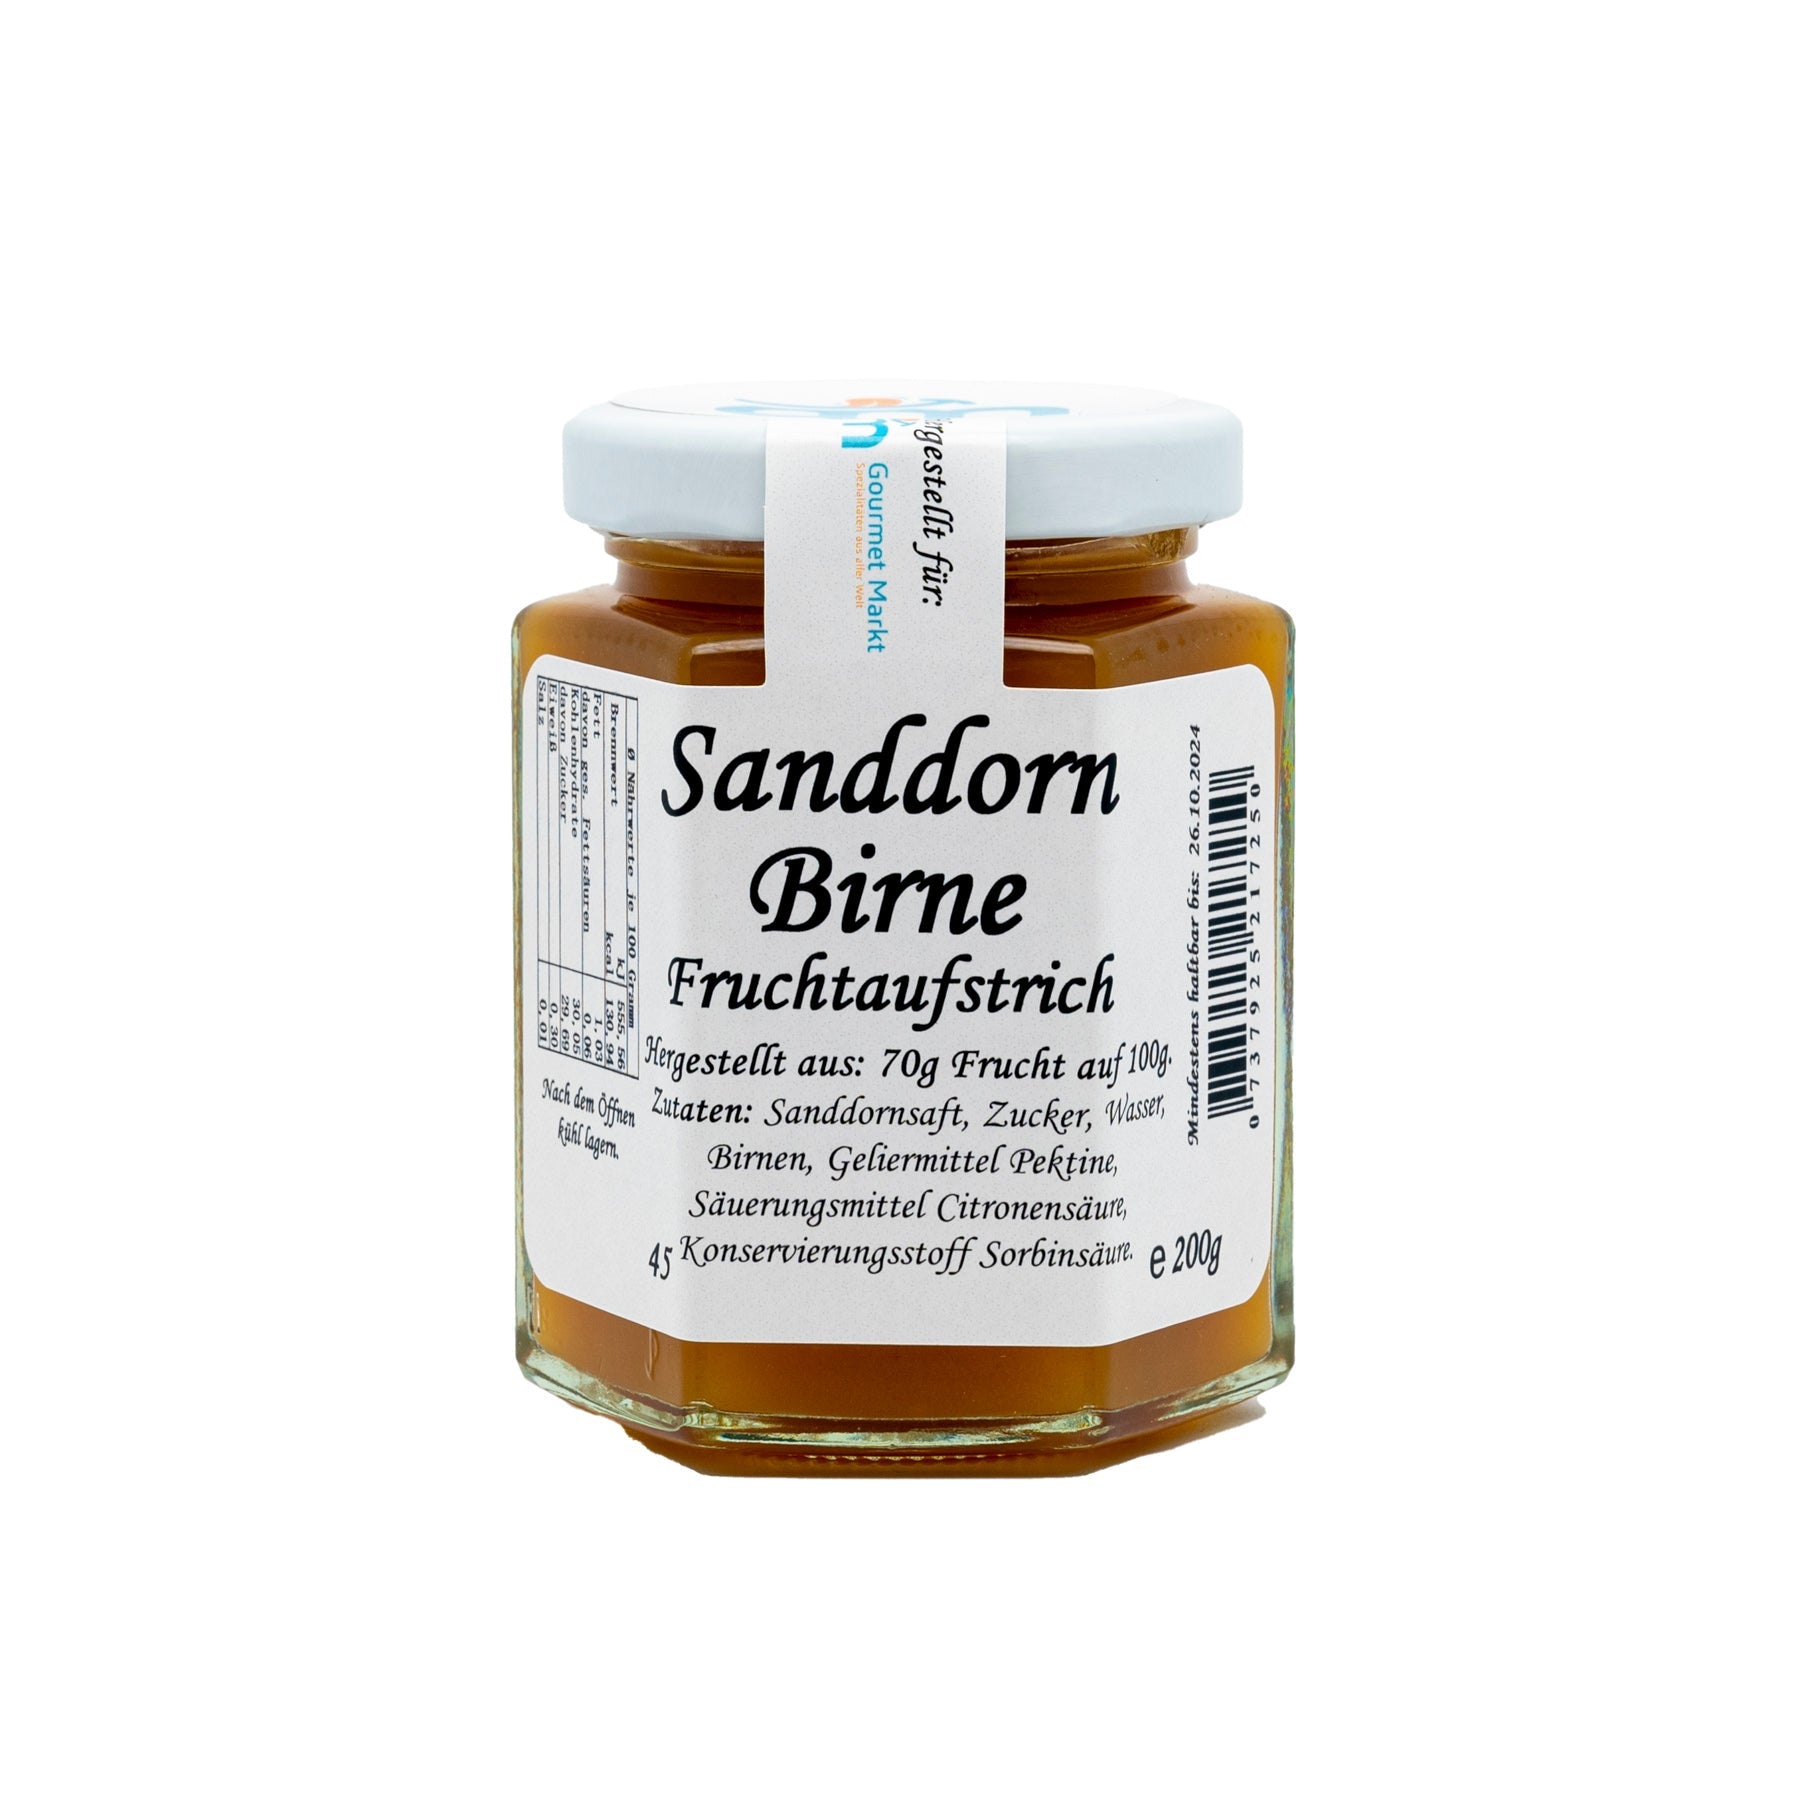 Sanddorn Birne (200g) - Gourmet Markt - Marmeladen Manufaktur